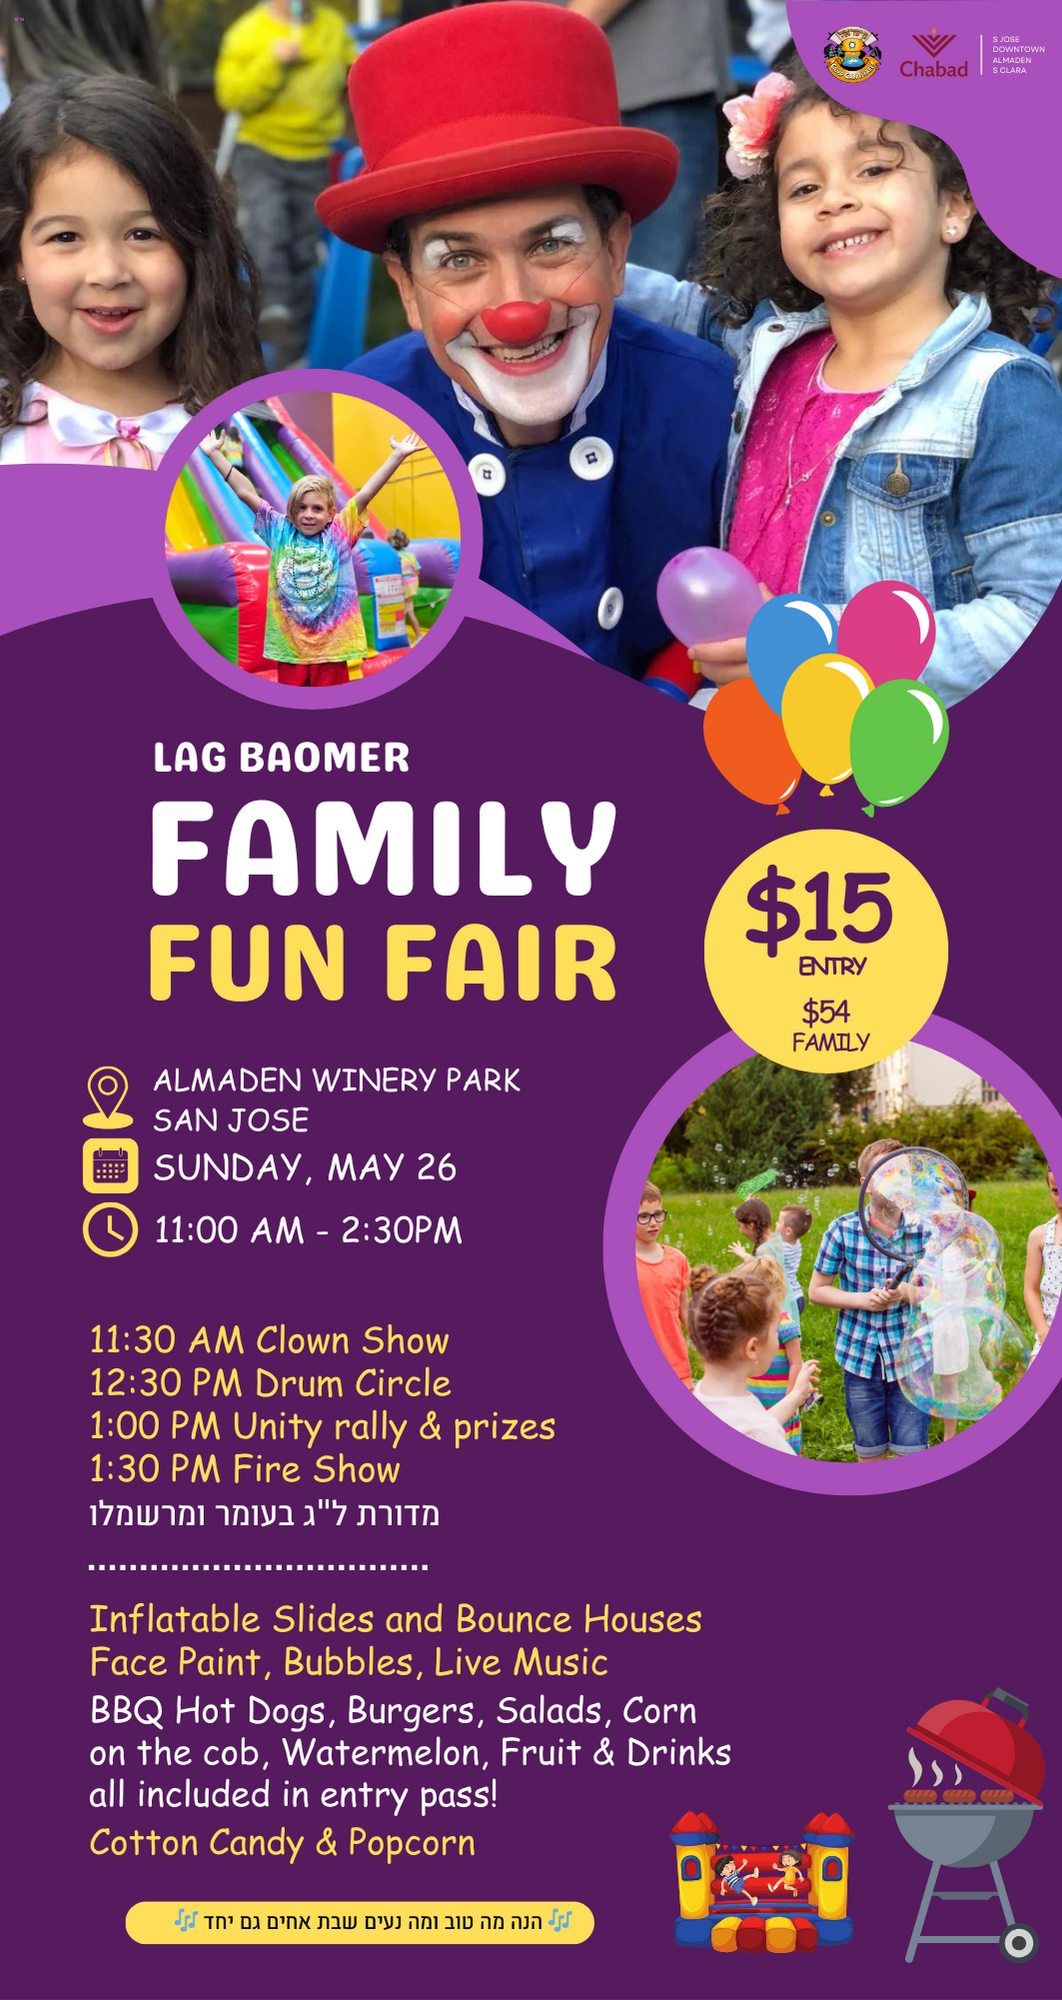 Lag Baomer Family Fun Fair